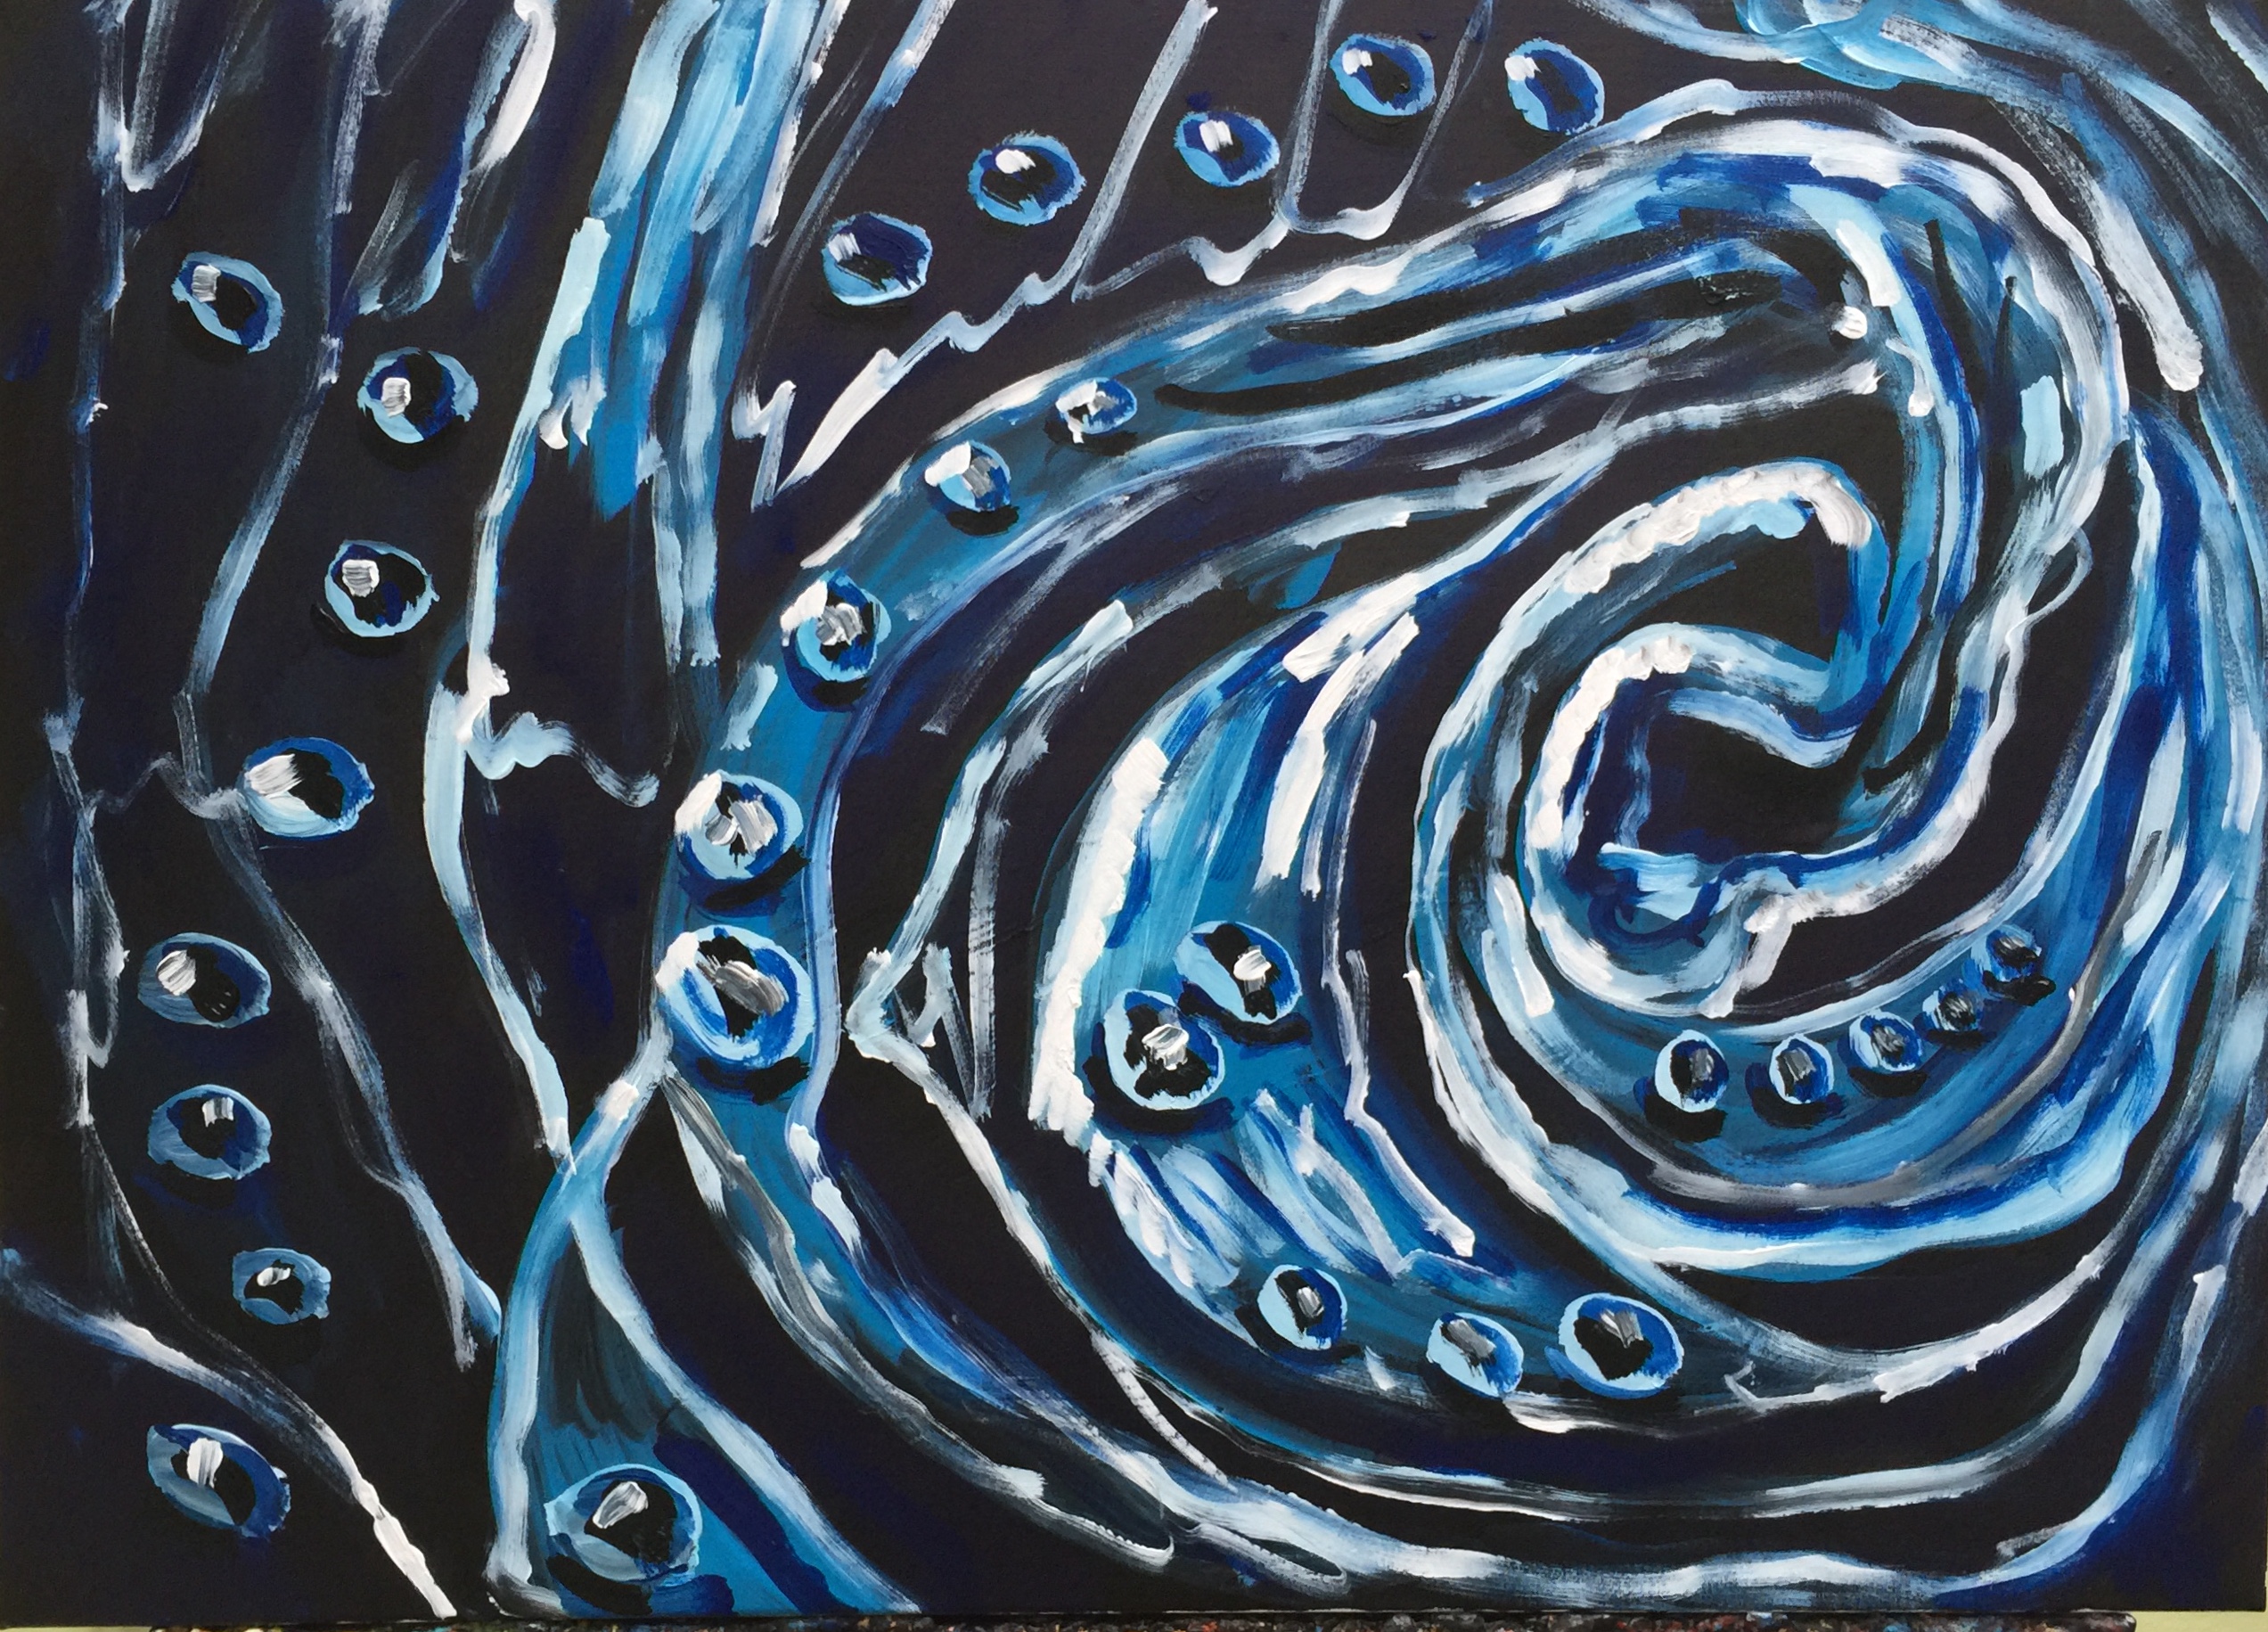 blu rose dark light , acrylic on canvas, cm 50 x cm 70, Occhiobello, 2020